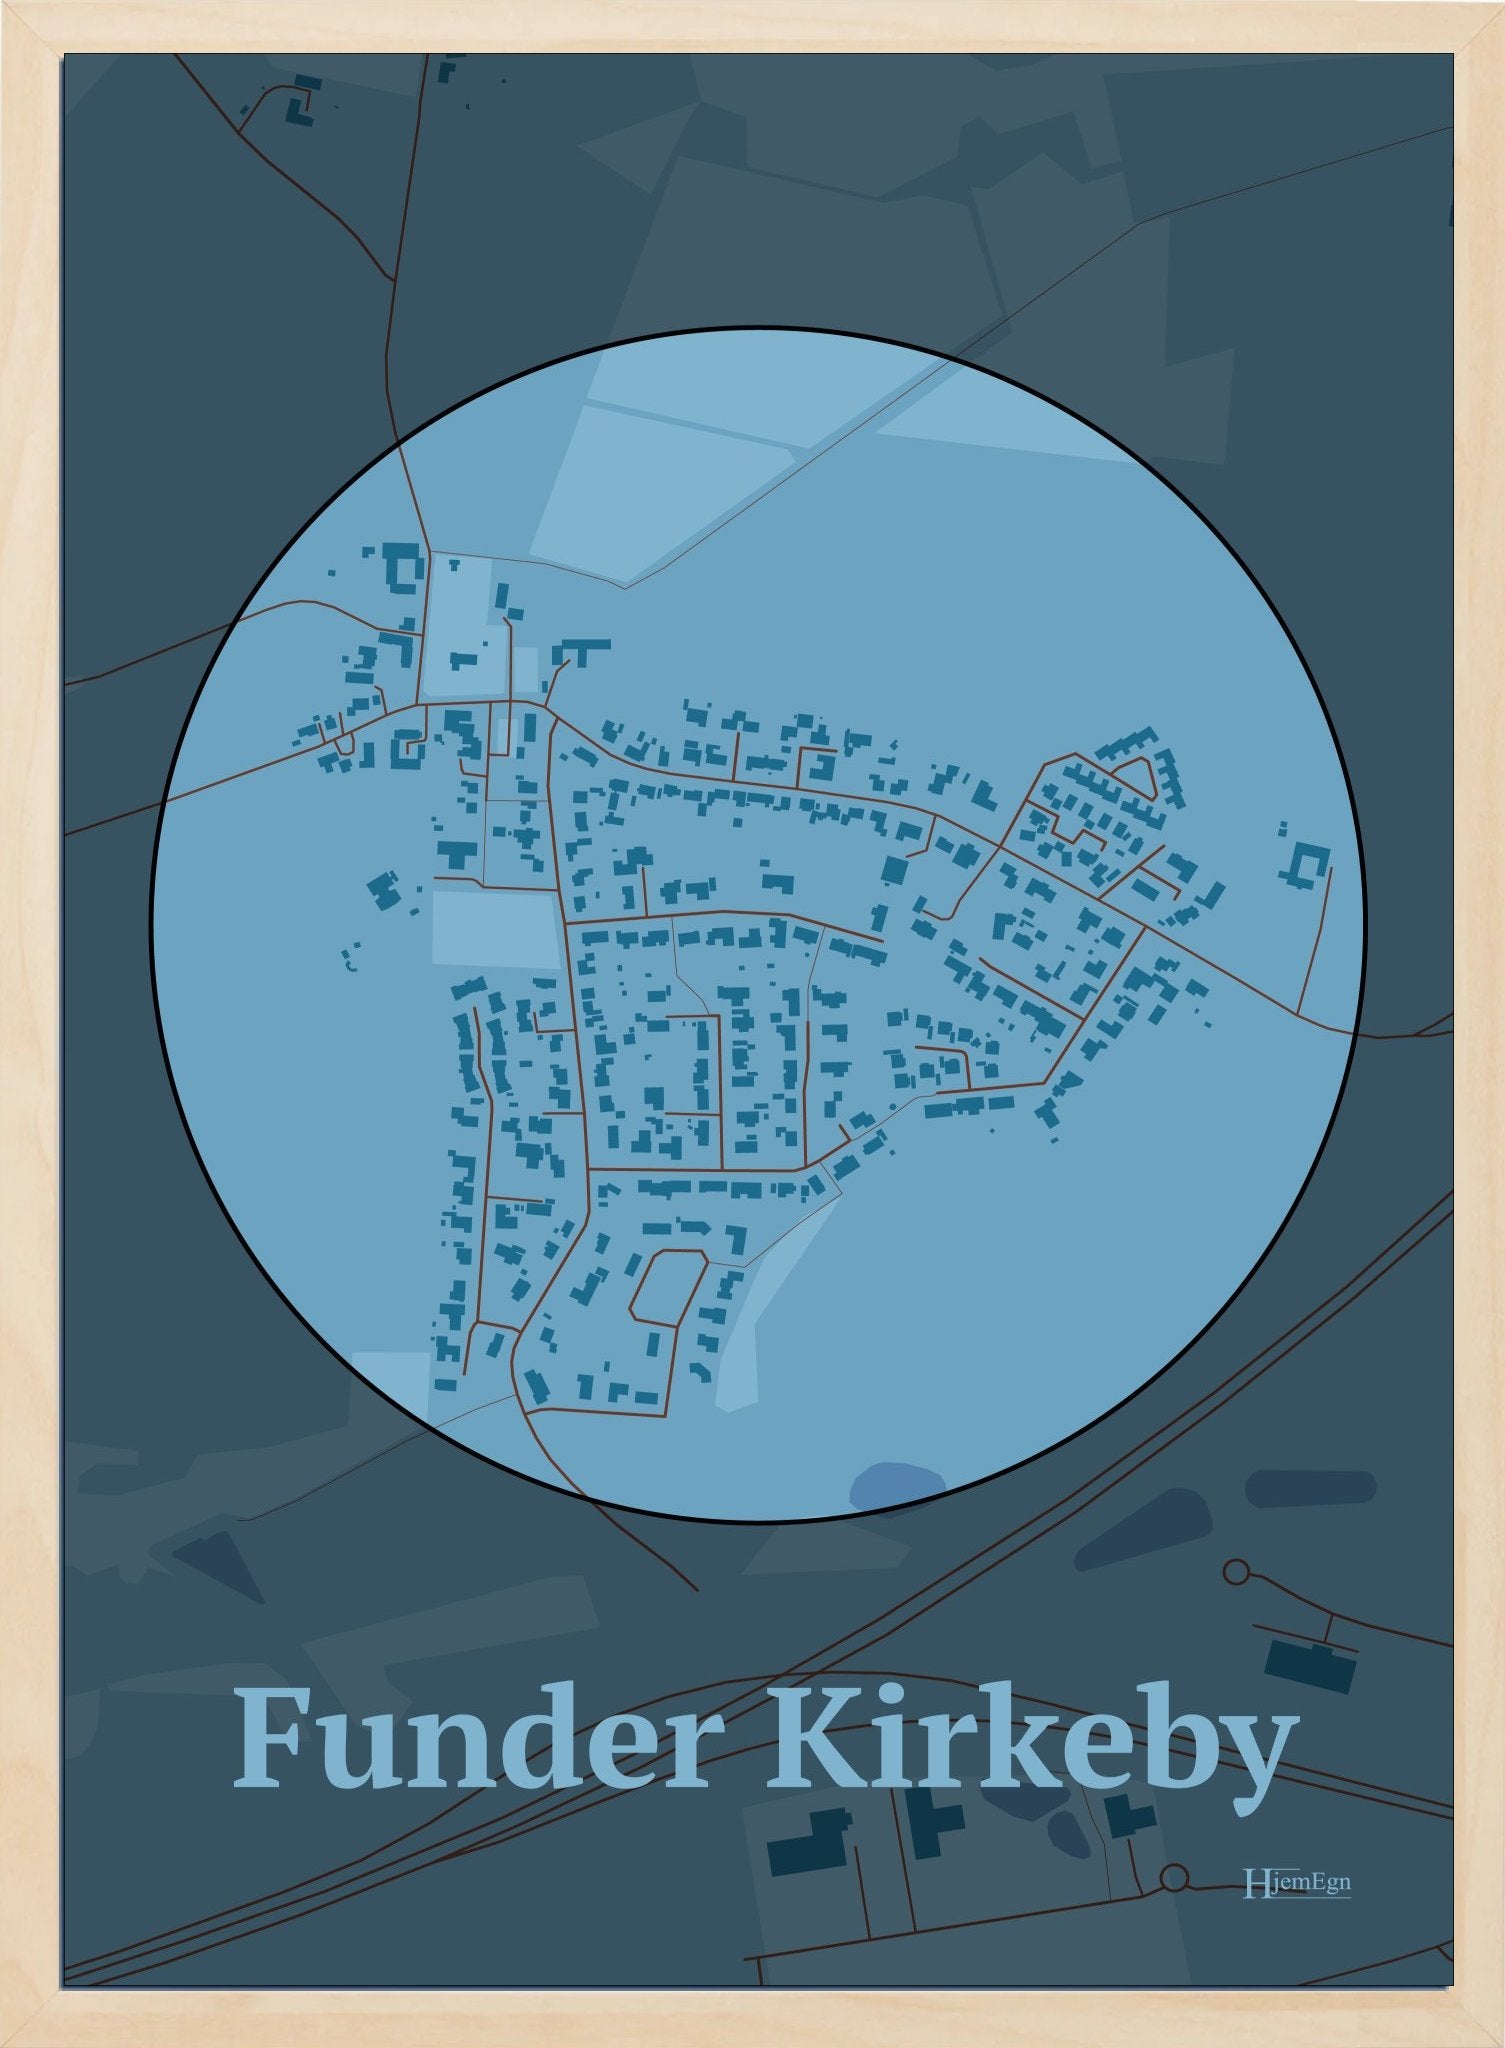 Funder Kirkeby plakat i farve pastel blå og HjemEgn.dk design centrum. Design bykort for Funder Kirkeby